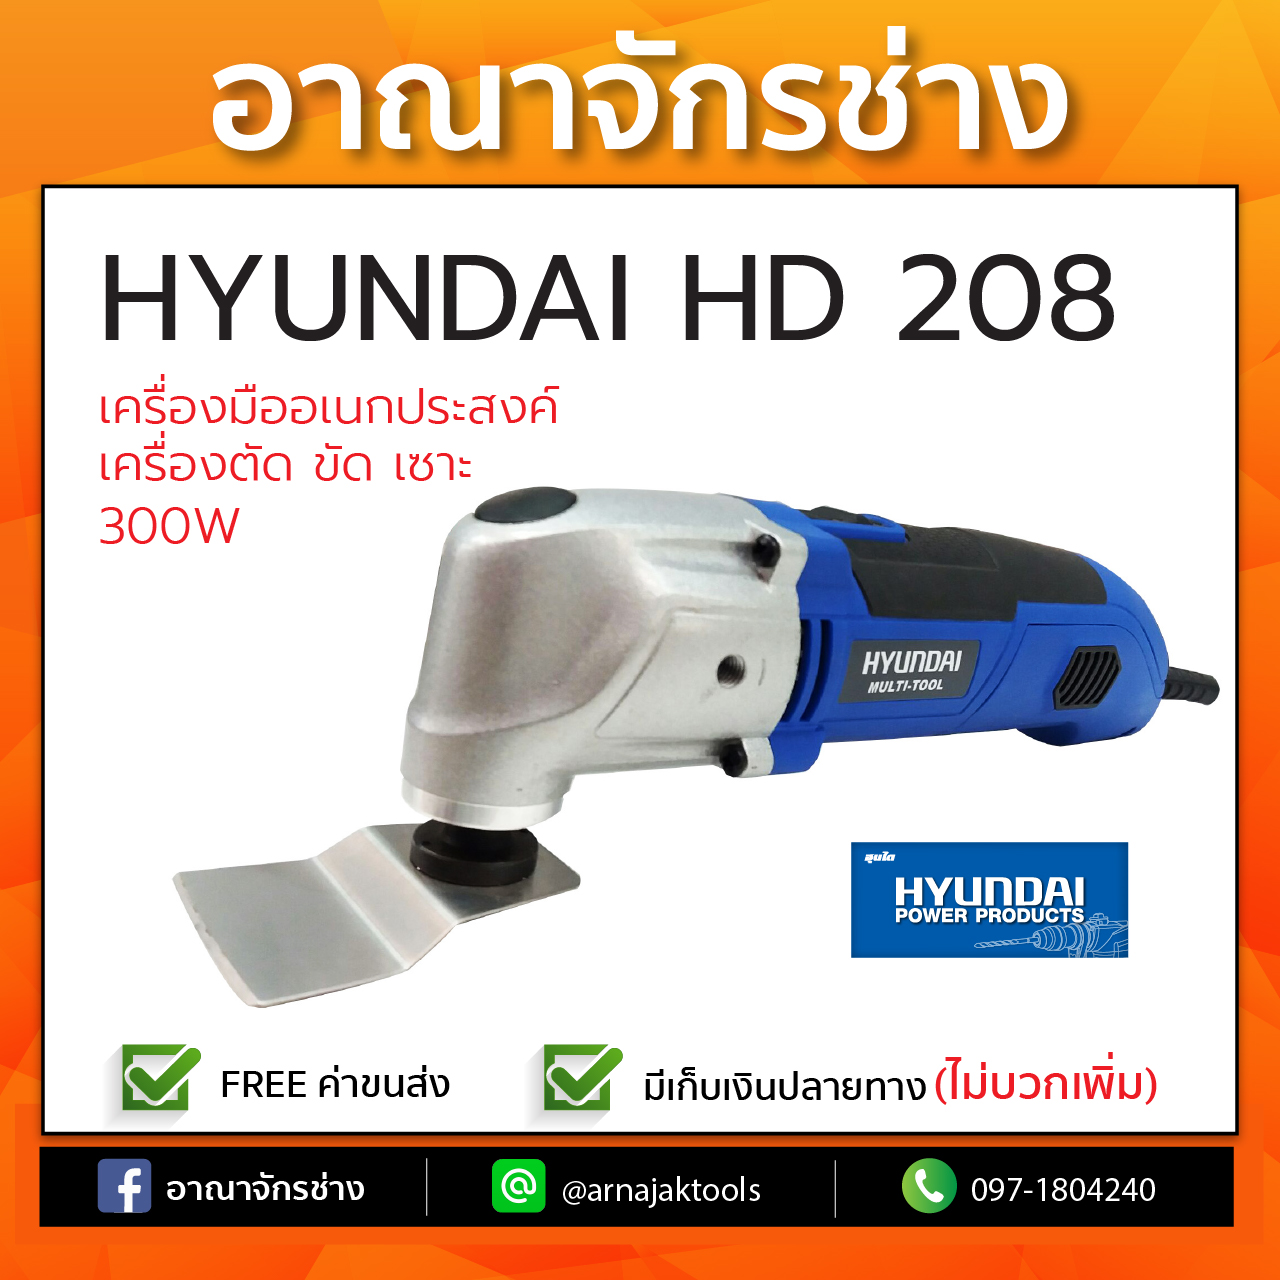 HYUNDAI HD-208 เครื่องตัด ขัด เซาะ